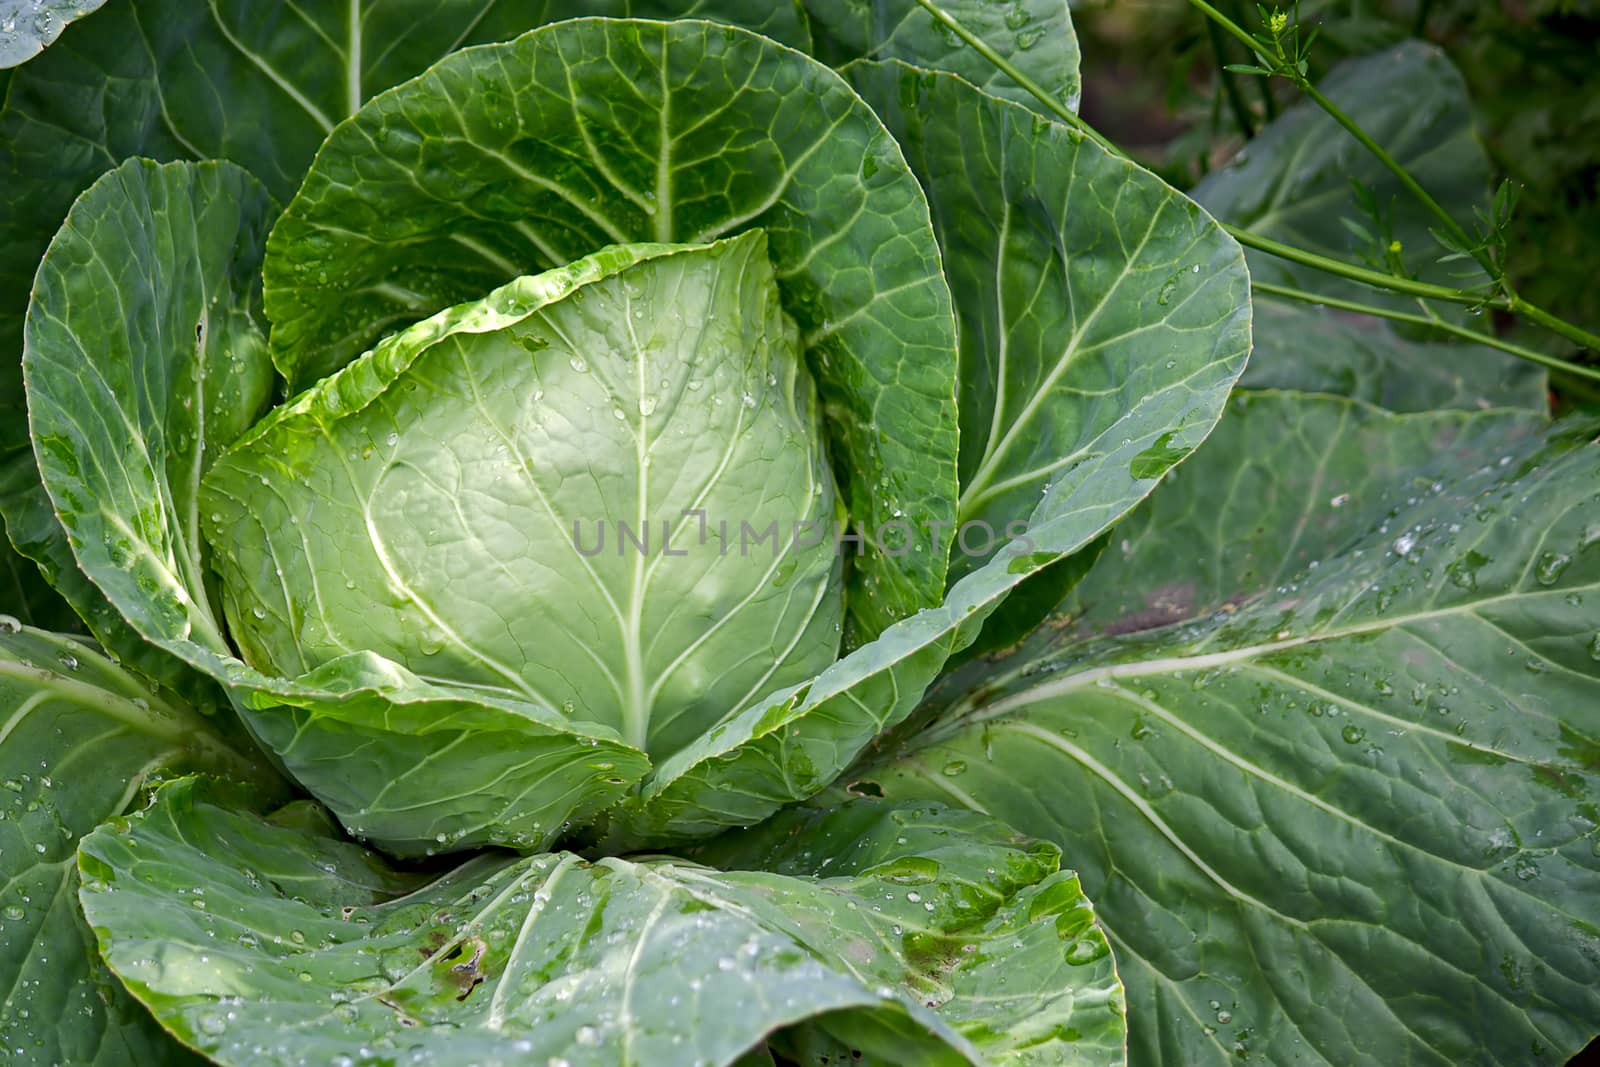  cabbage by zhannaprokopeva